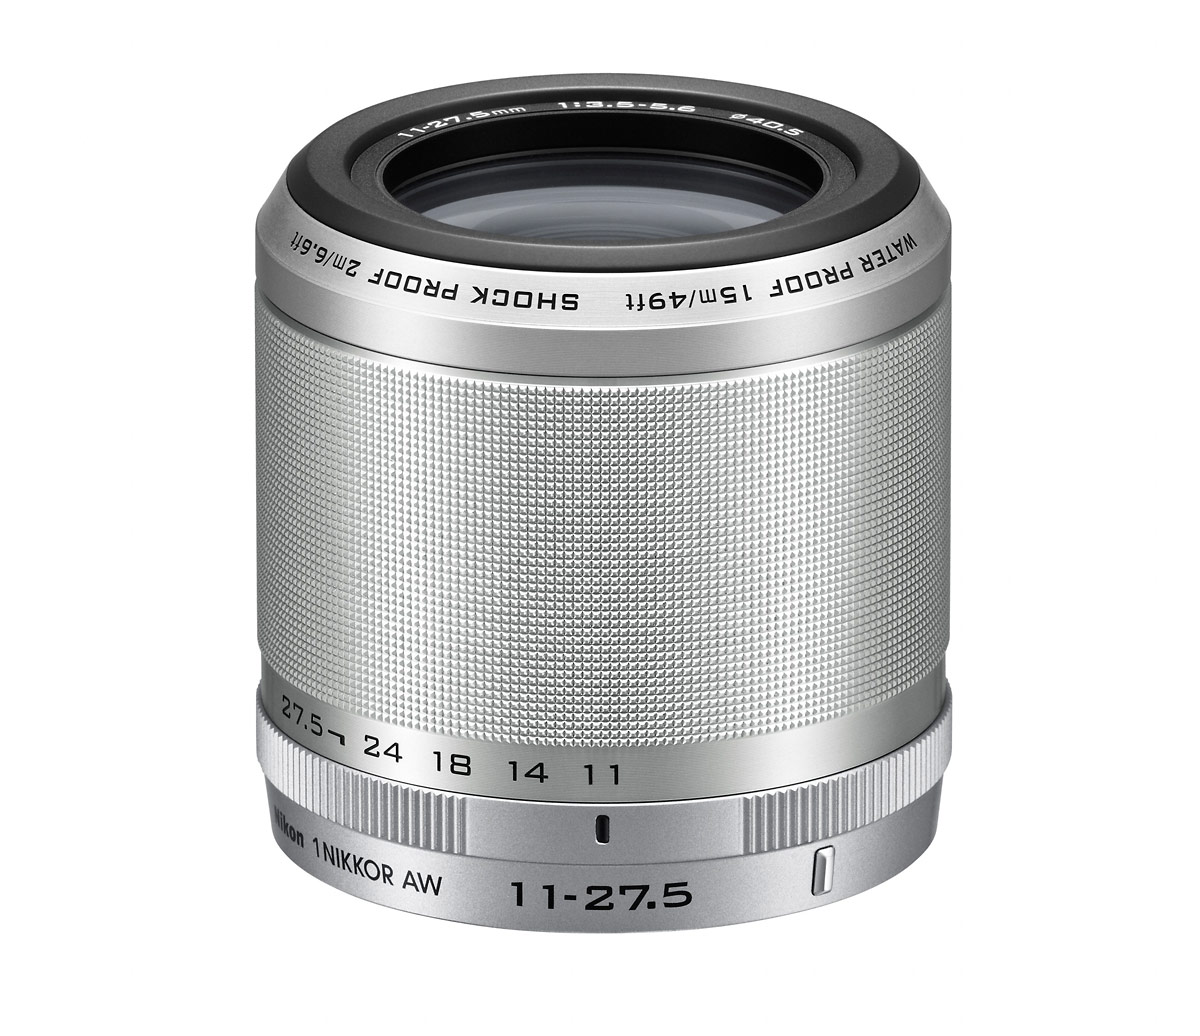 Nikon 1 Nikkor AW 11-27.5mm f/3.5-5.6 Zoom Lens - Silver